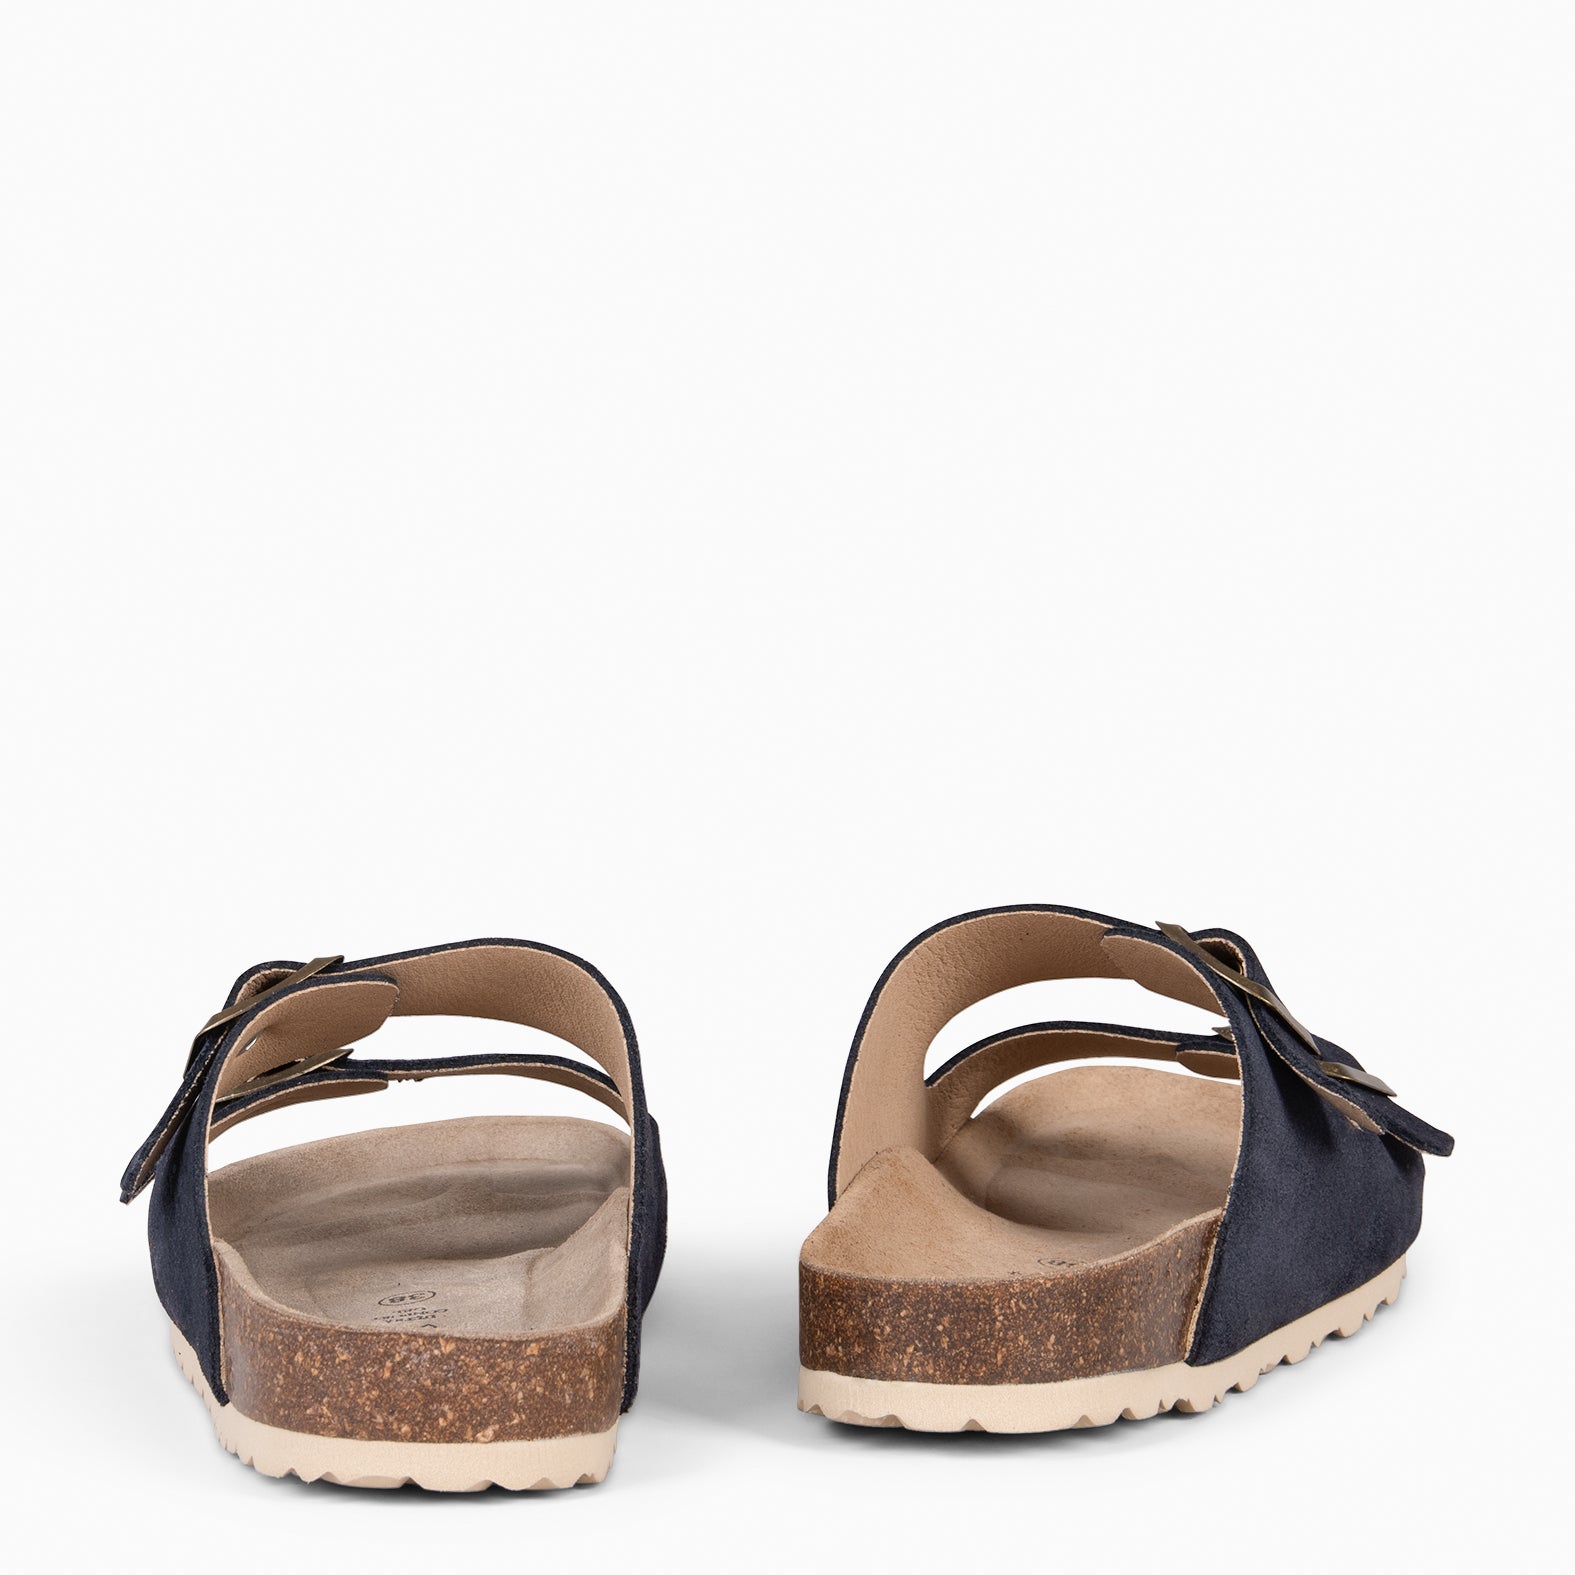 BORA - NAVY Flat sandal with double buckle